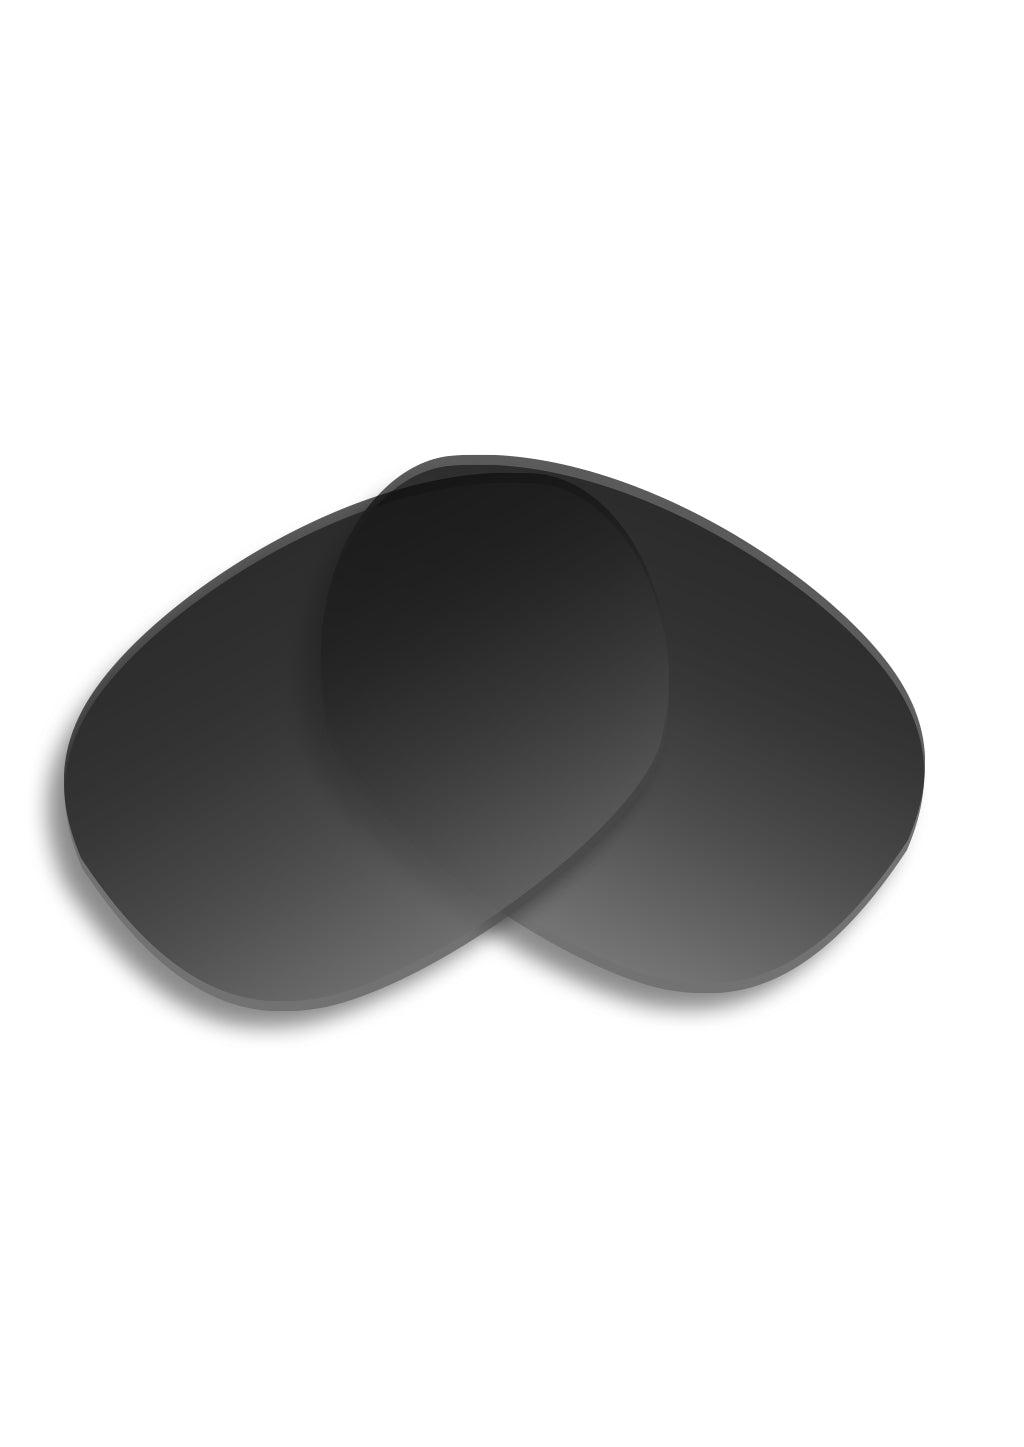 Extra lenses for Titan V2 sunglasses. This is gradient grey/black.